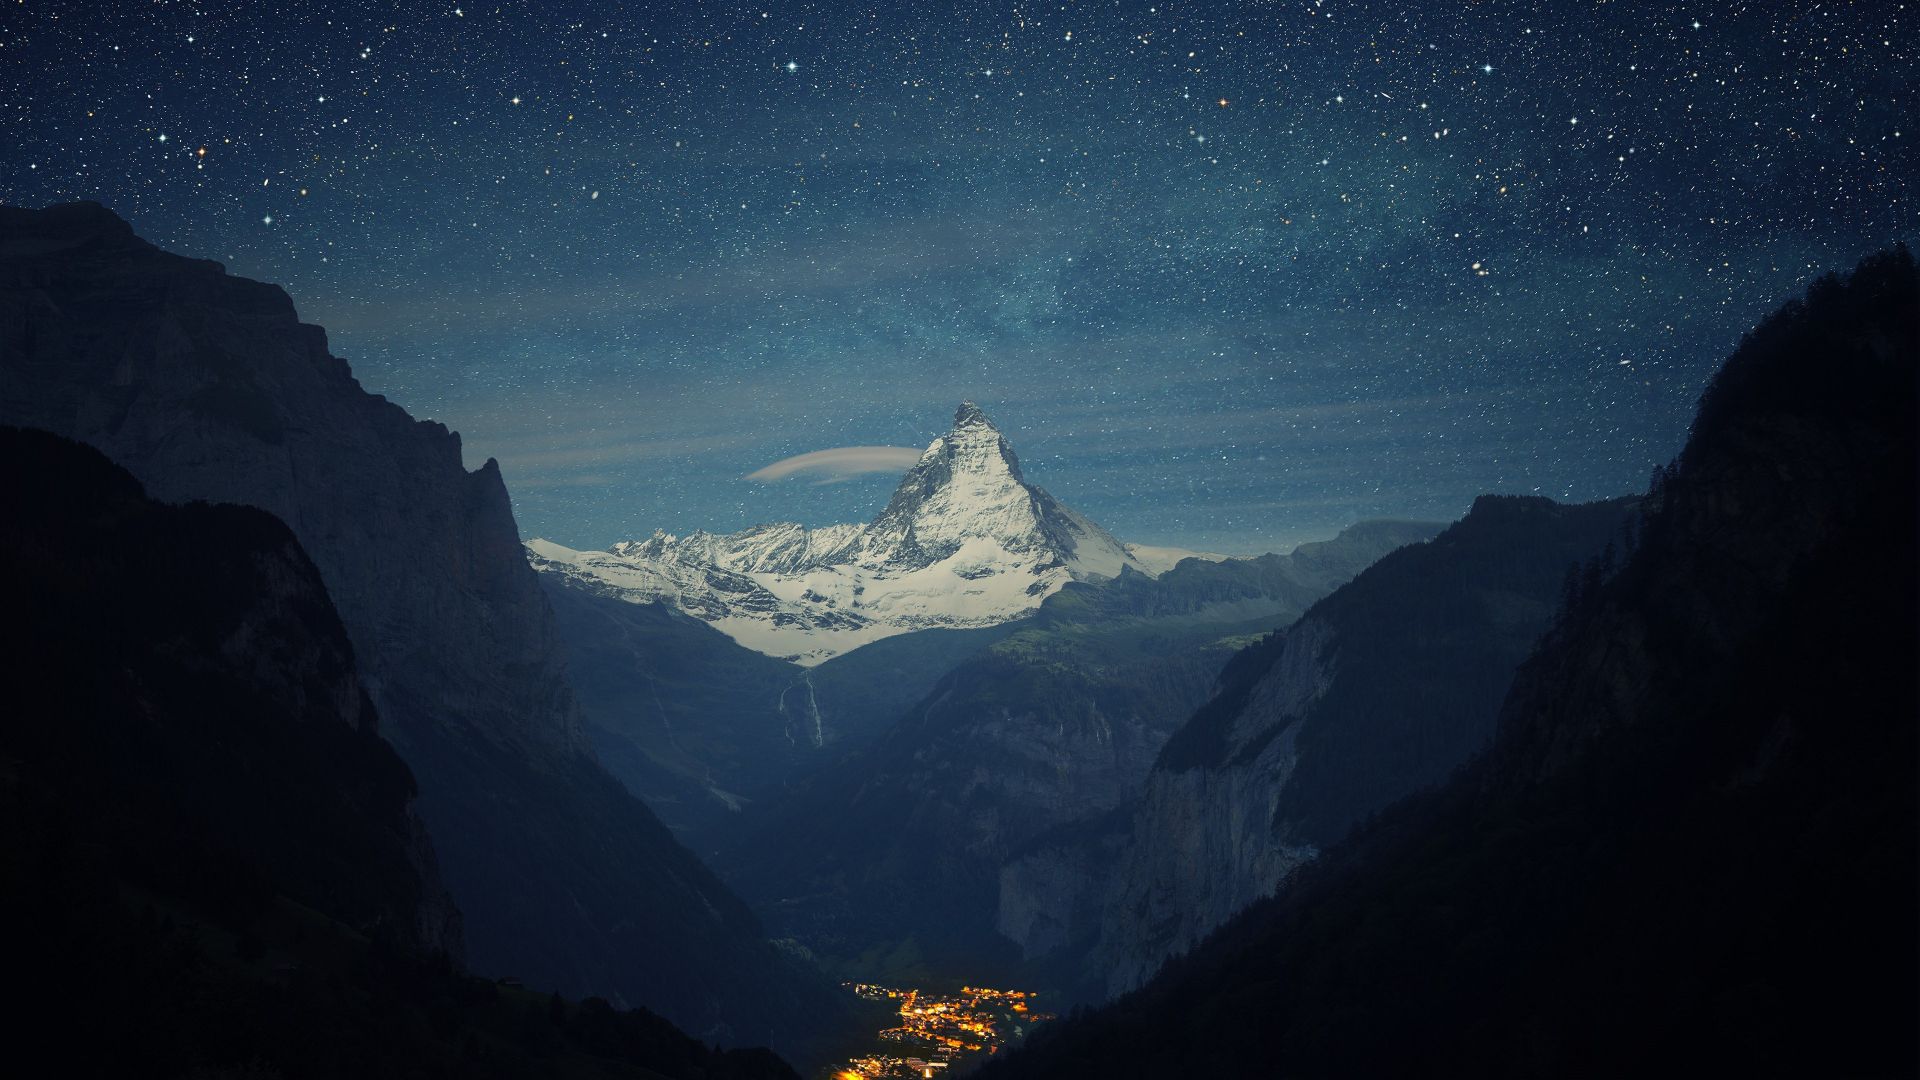 Switzerland, 4k, 5k wallpaper, Alps, mountains, stars, night (horizontal)